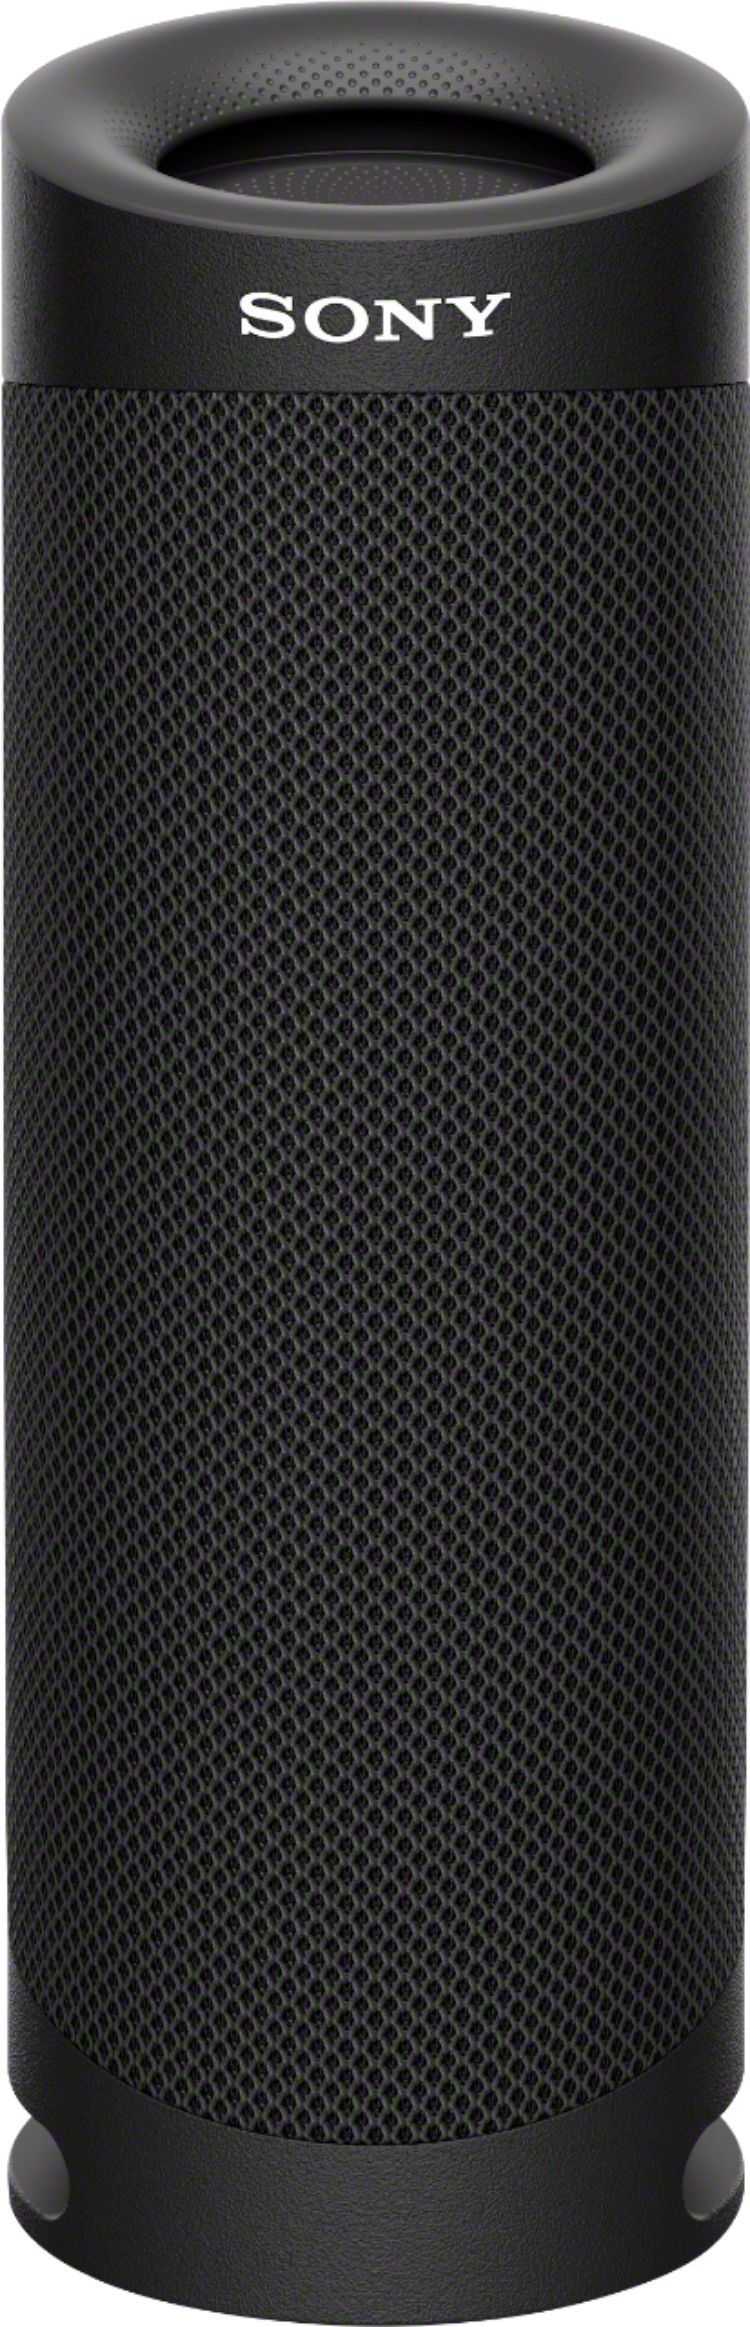 Sony SRS-XB23 Portable Bluetooth Speaker Black SRSXB23/B - Best Buy | Best Buy U.S.